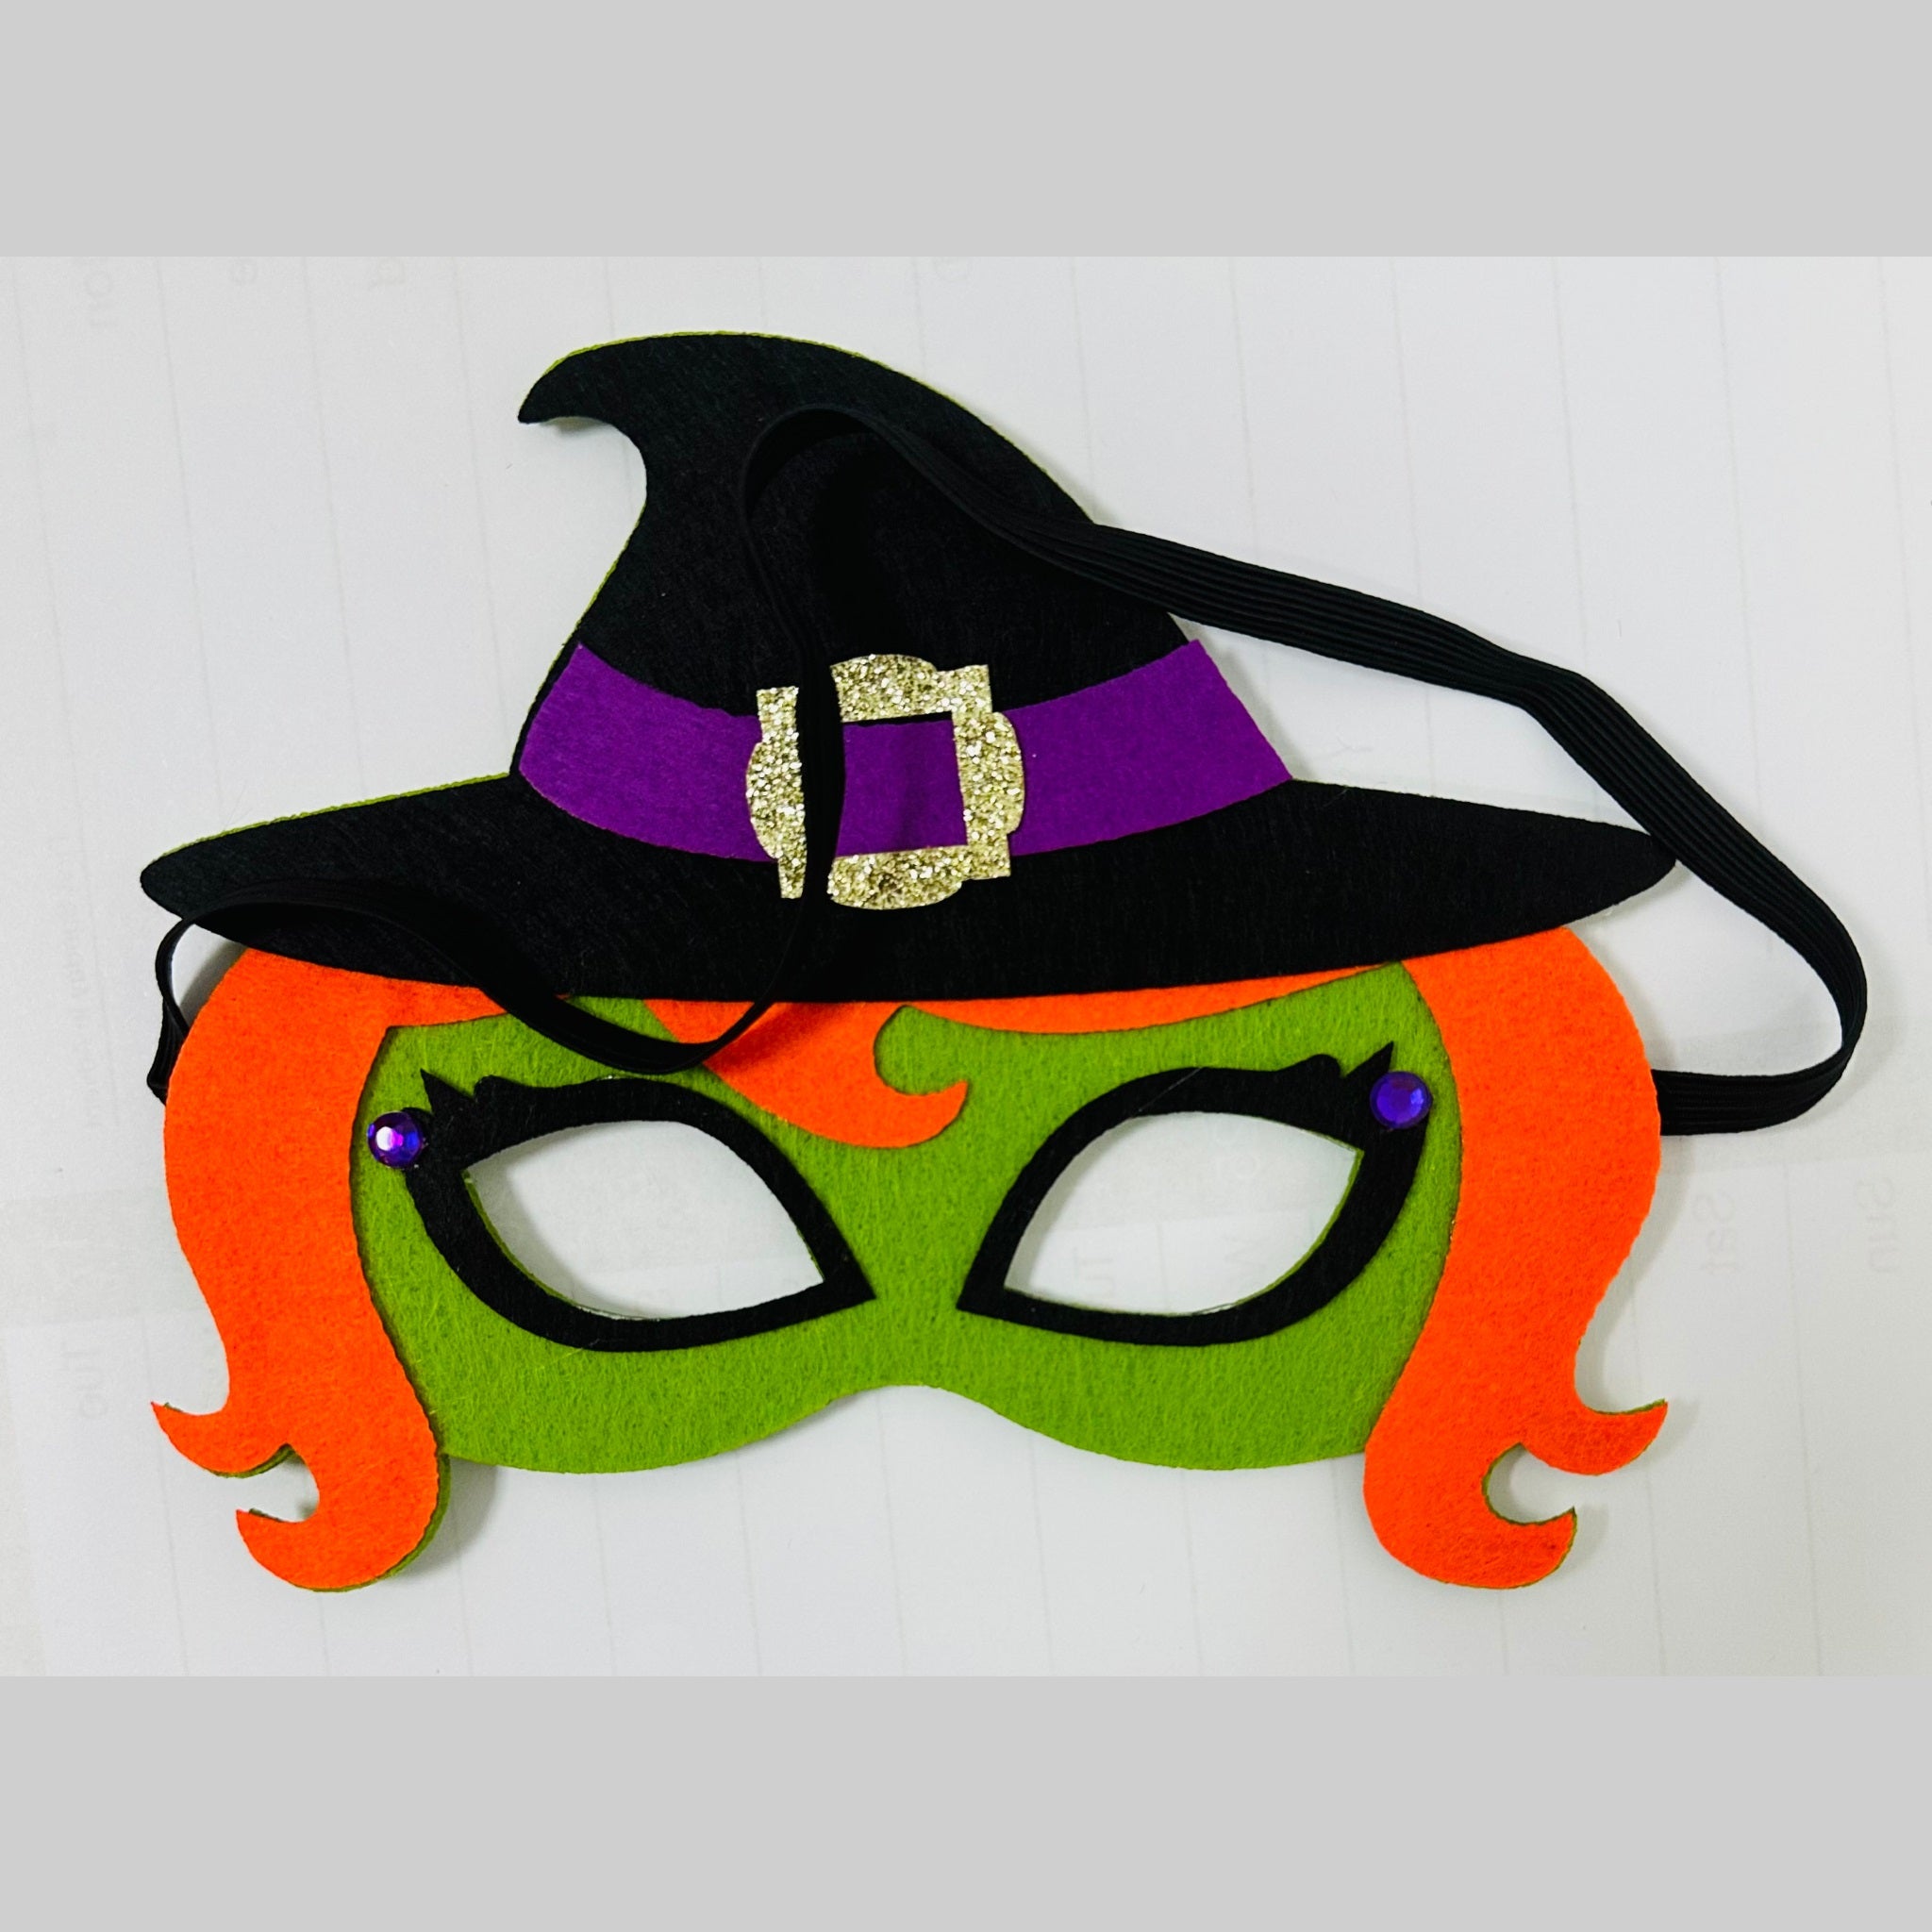 Beclen Harp Halloween Foam Character Masks - 4 Pack Cute Spooky Fancy Dress Party Children Adult